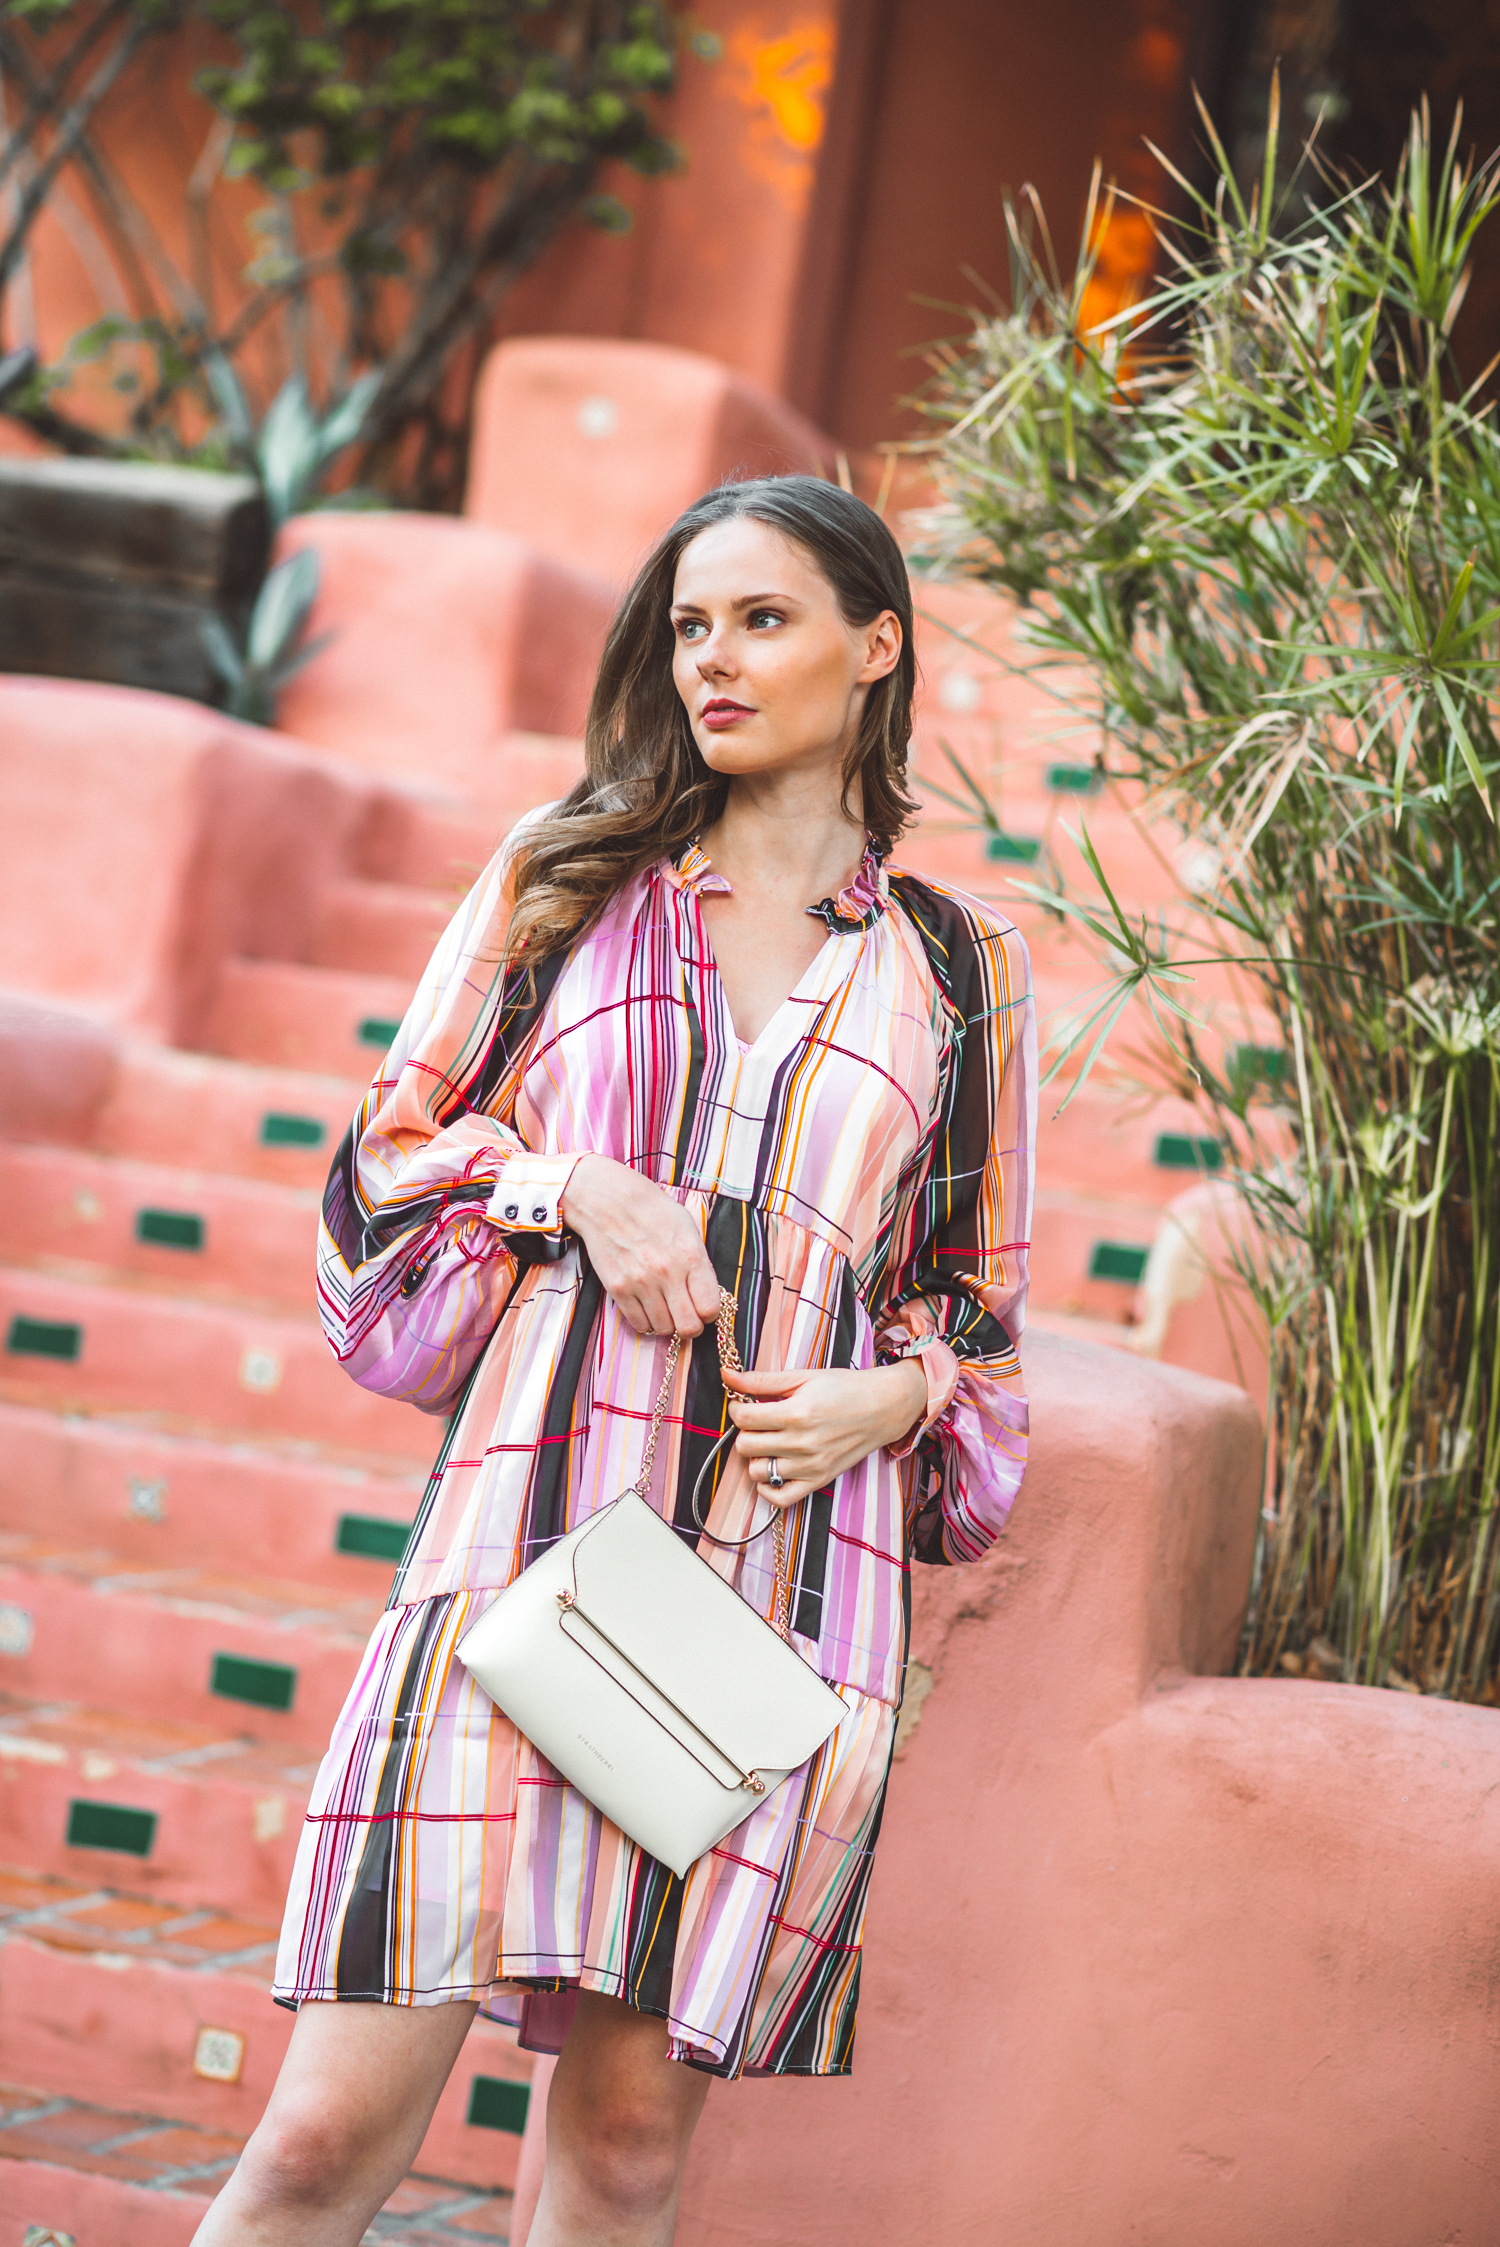 Alyssa Campanella of The A List blog shares 5 Danish brands to know wearing Stine Goya Jasmine dress and Strathberry stylist bag